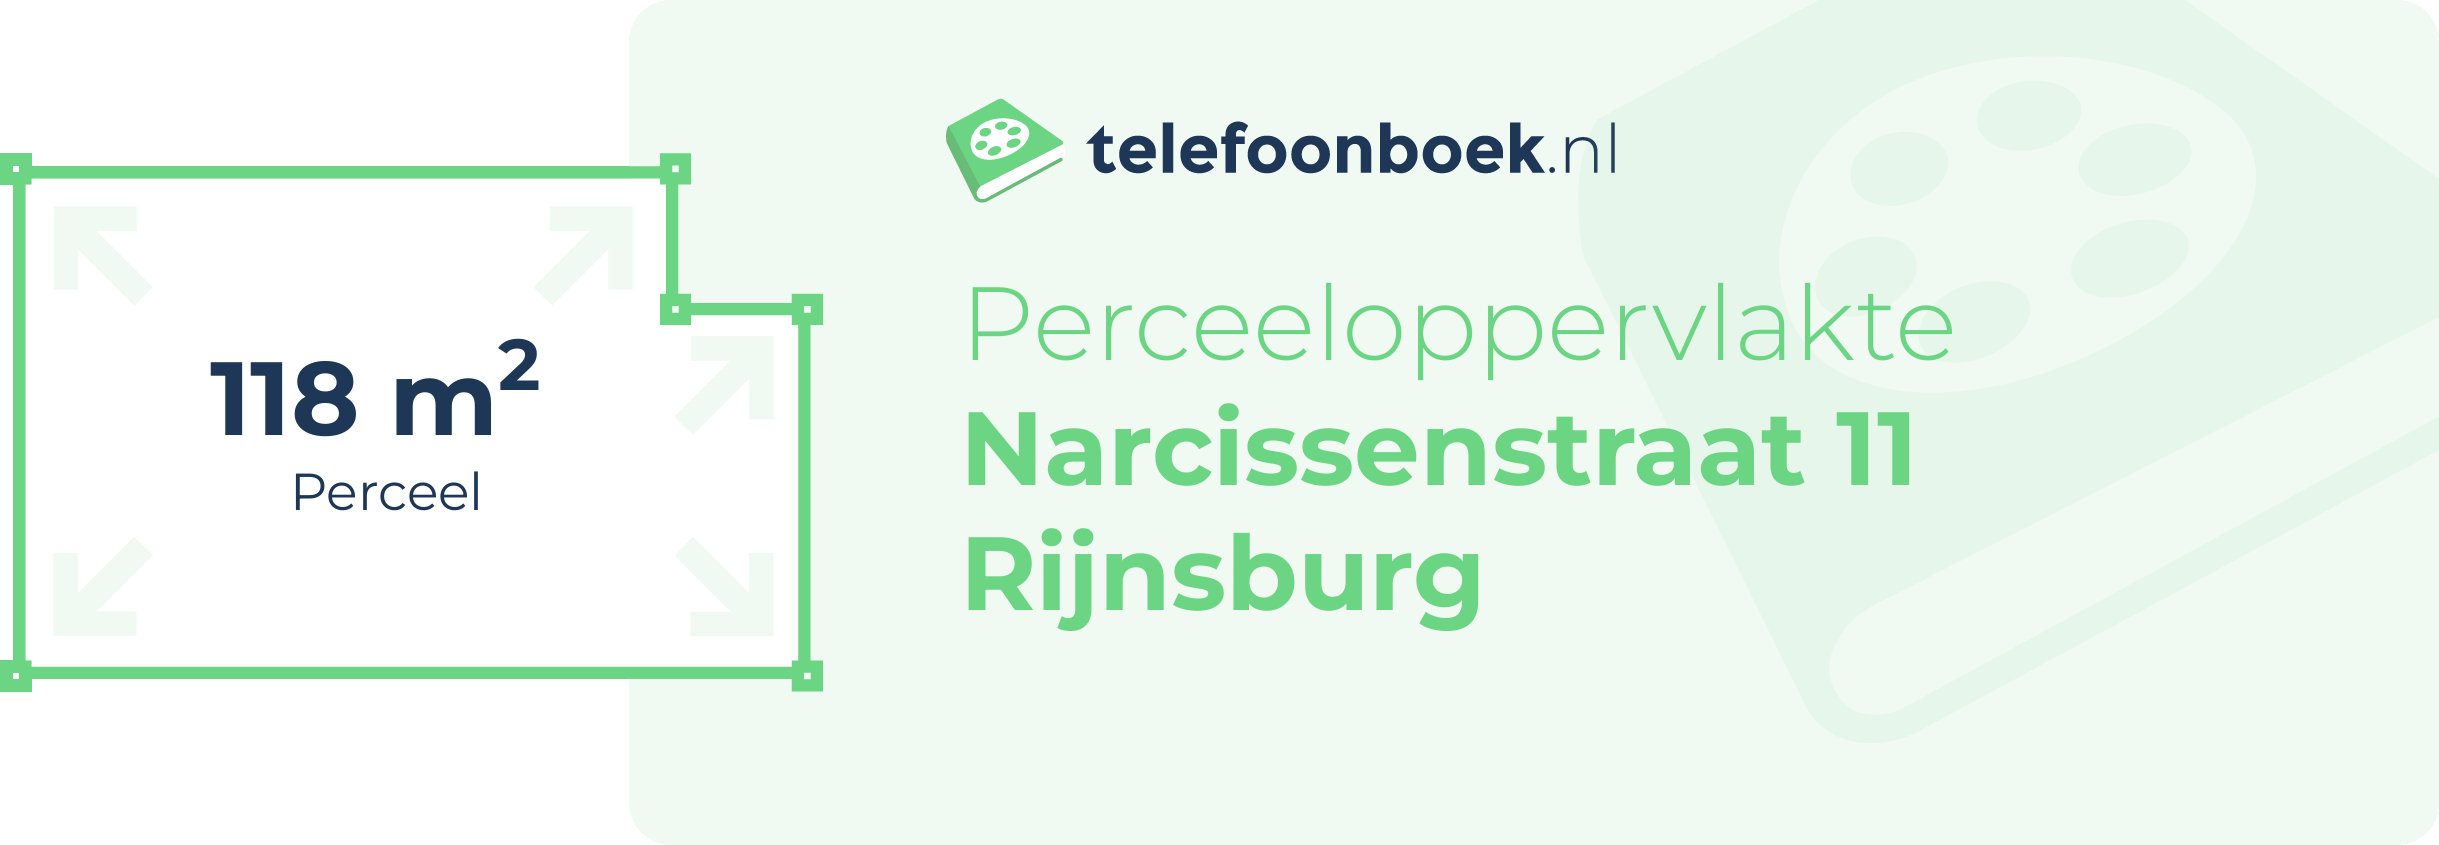 Perceeloppervlakte Narcissenstraat 11 Rijnsburg